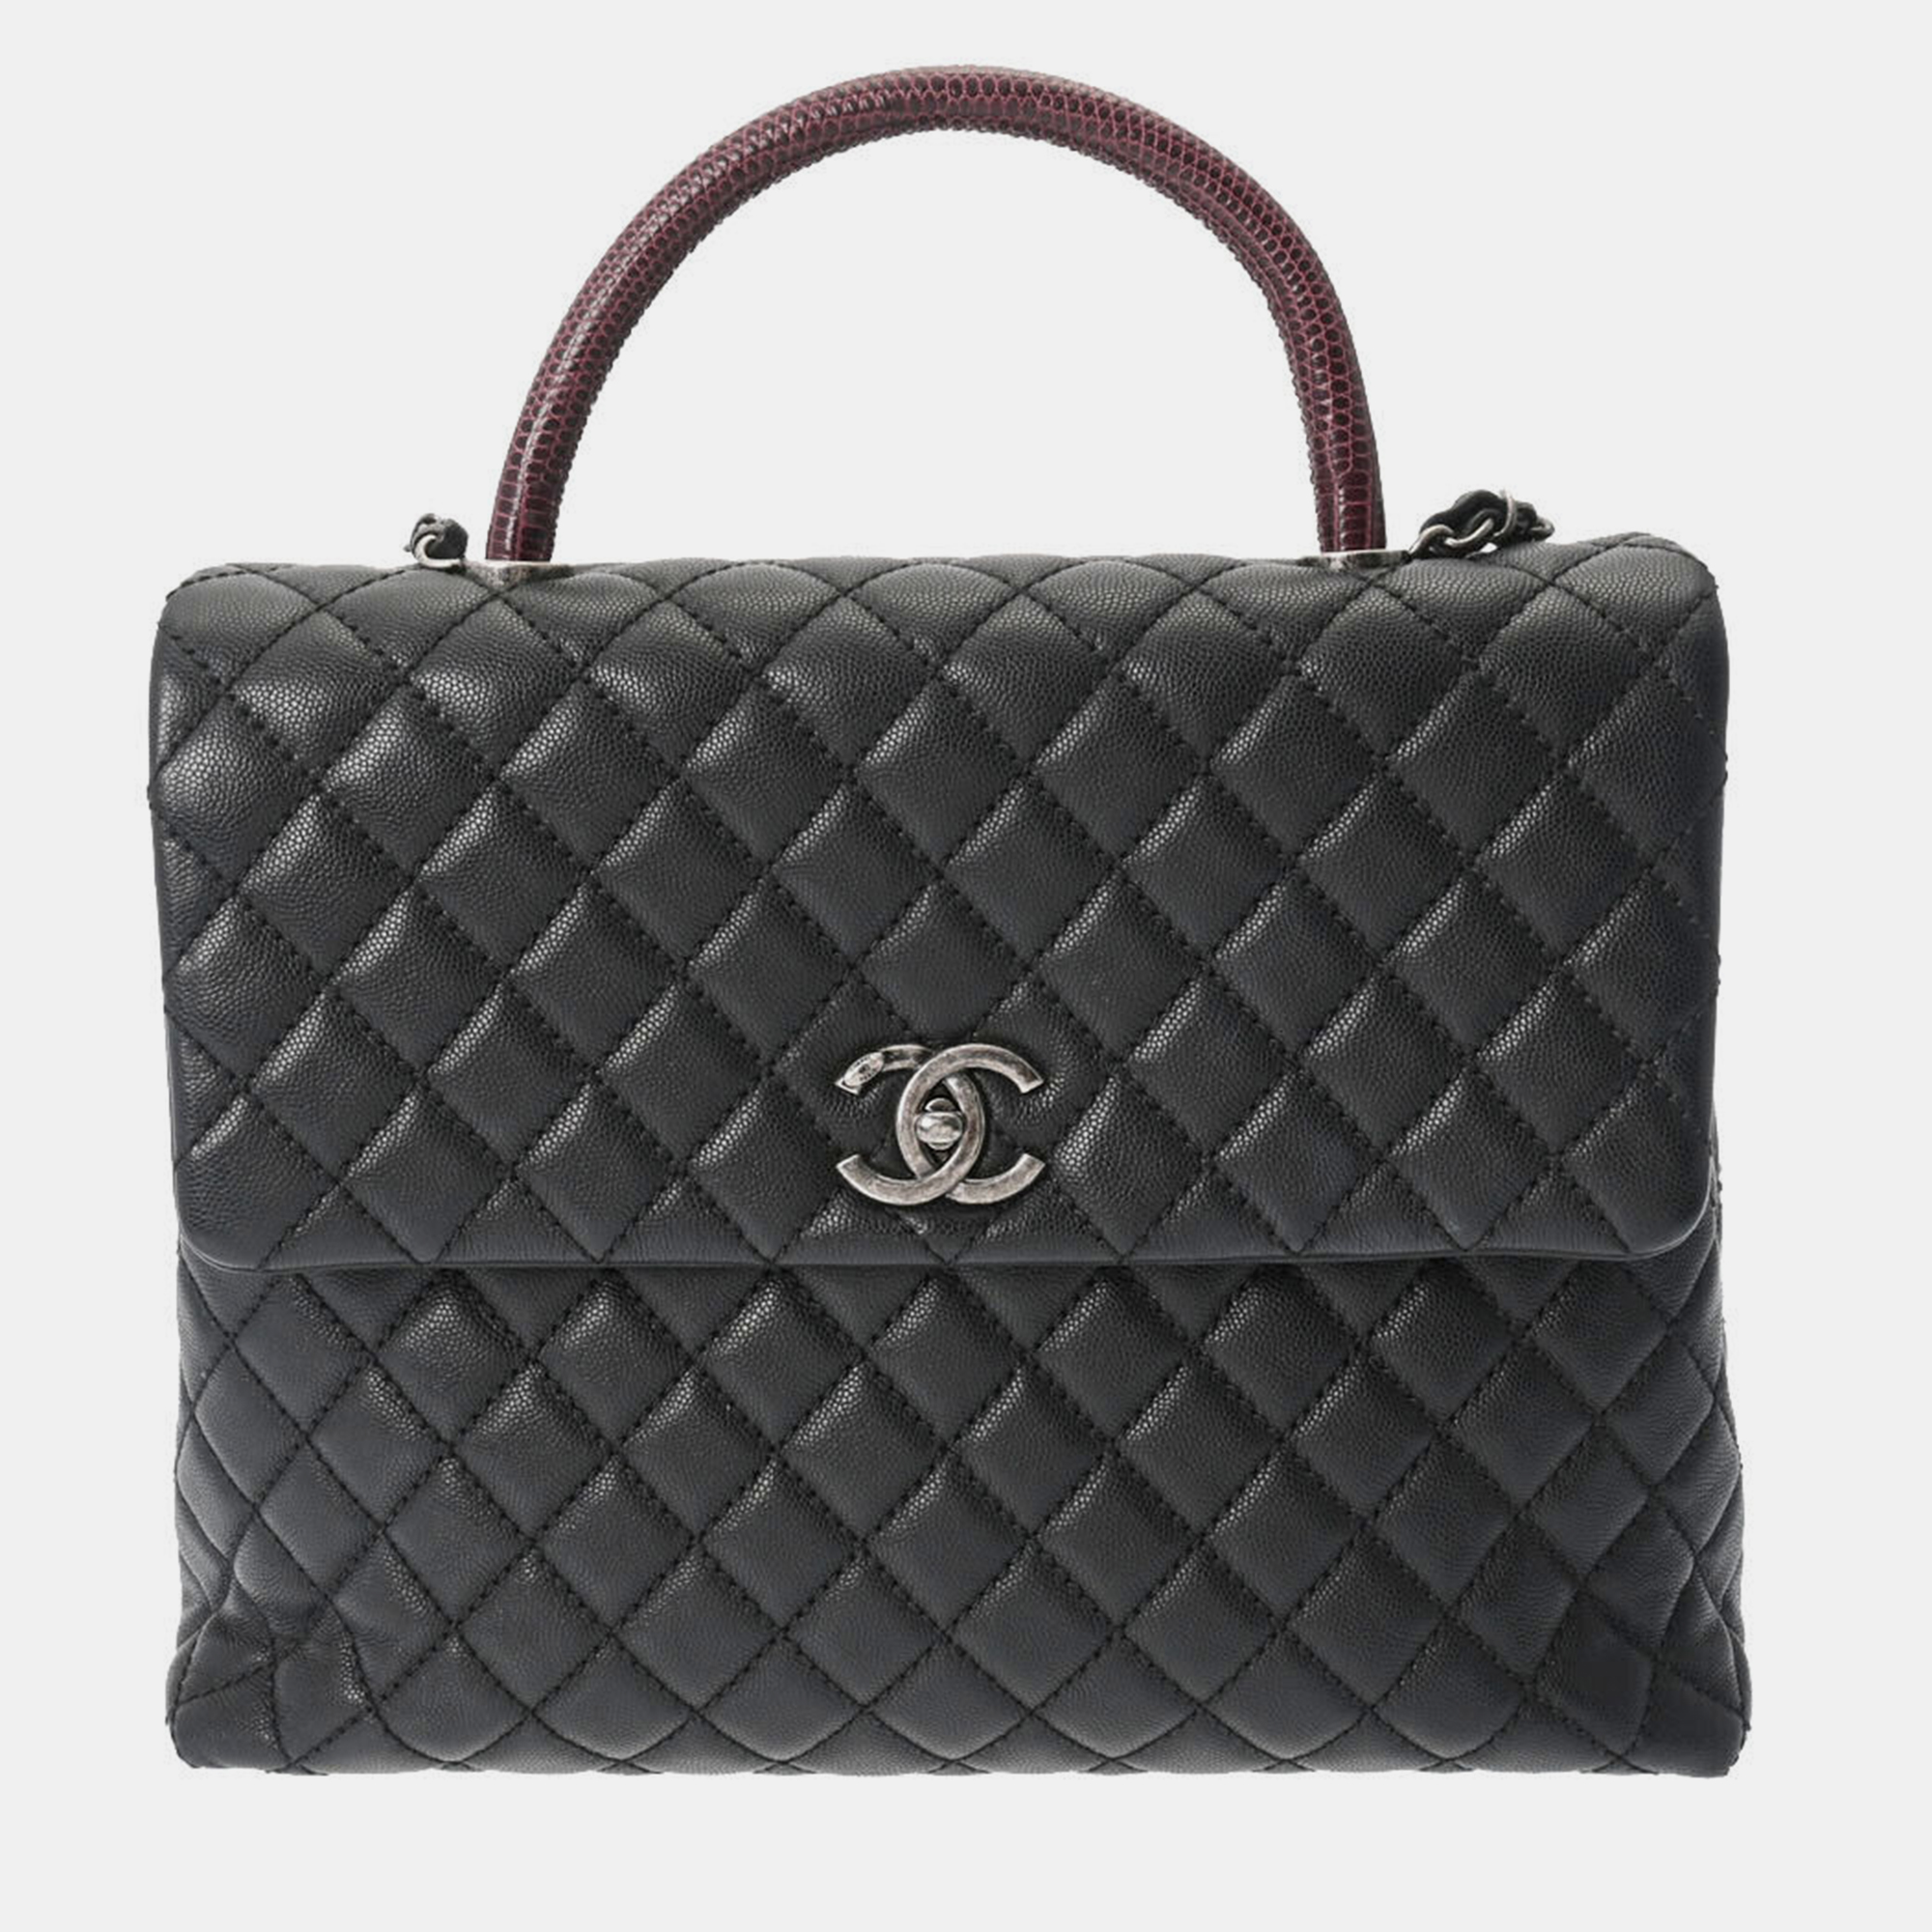 

Chanel Black Caviar Leather Coco Top Handle Bag